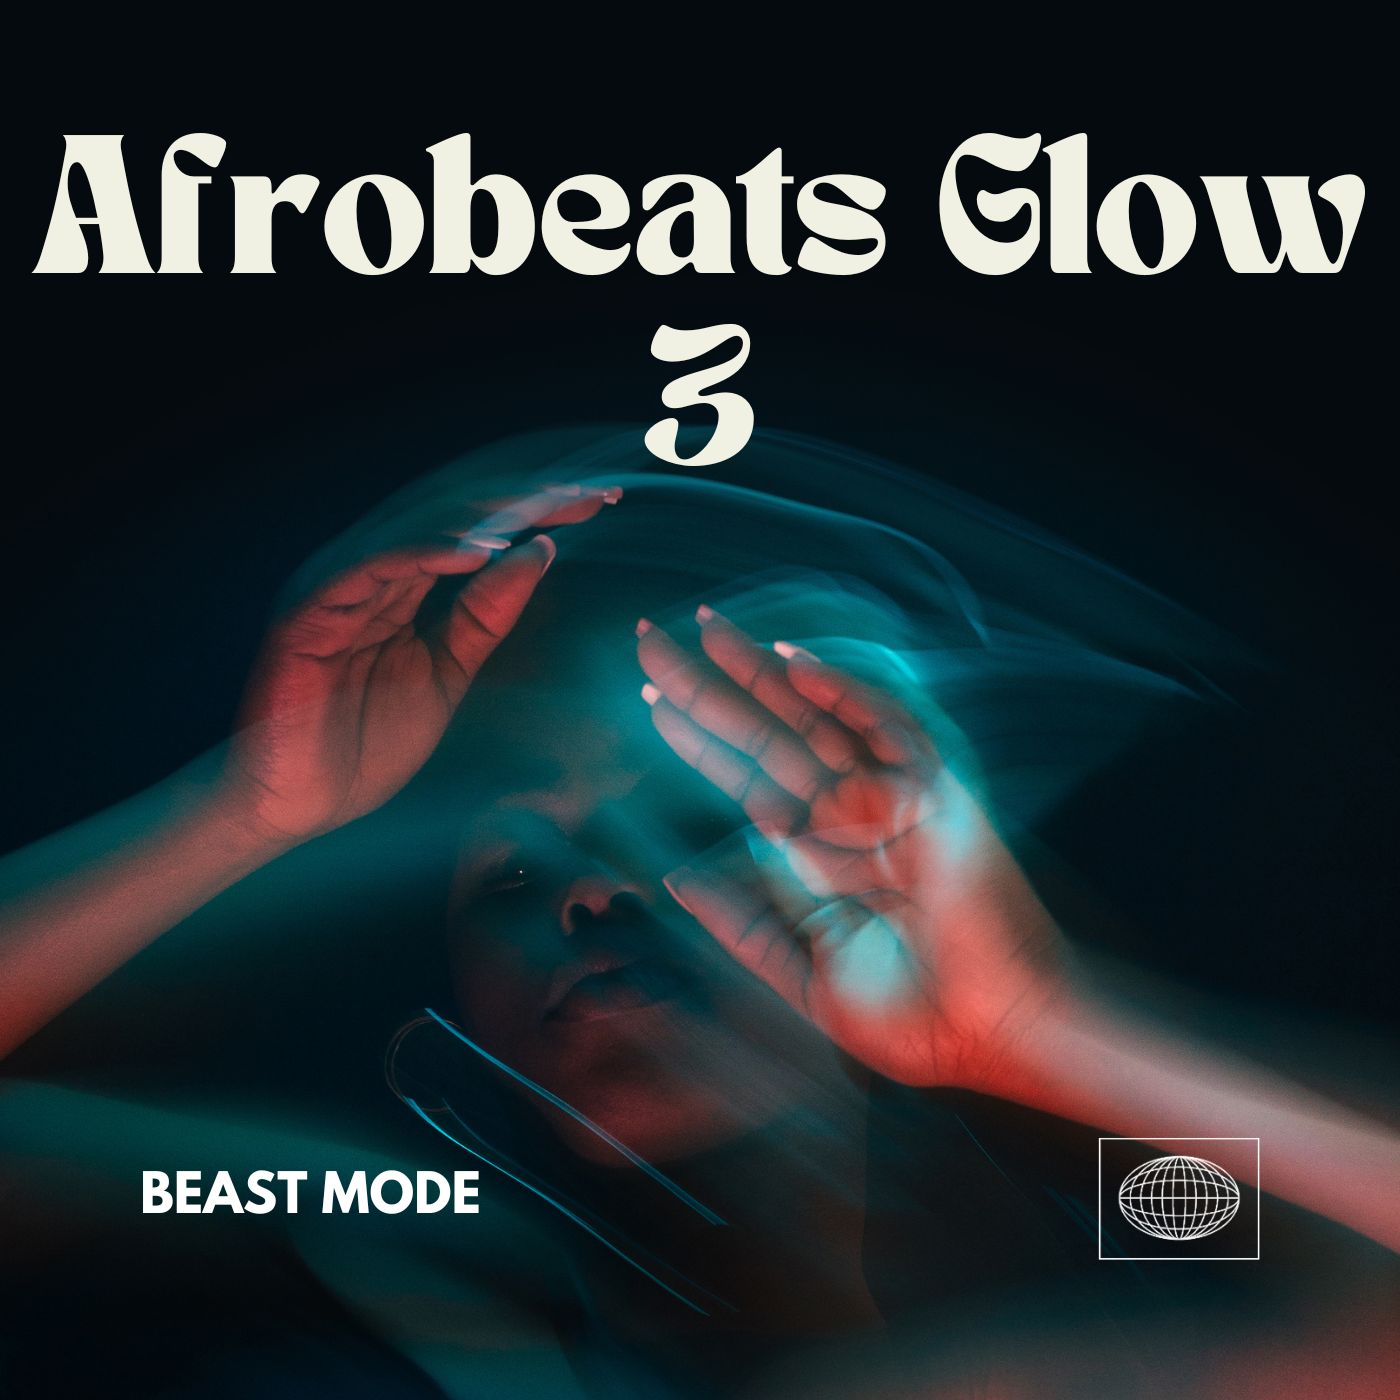 Afrobeats Glow 3